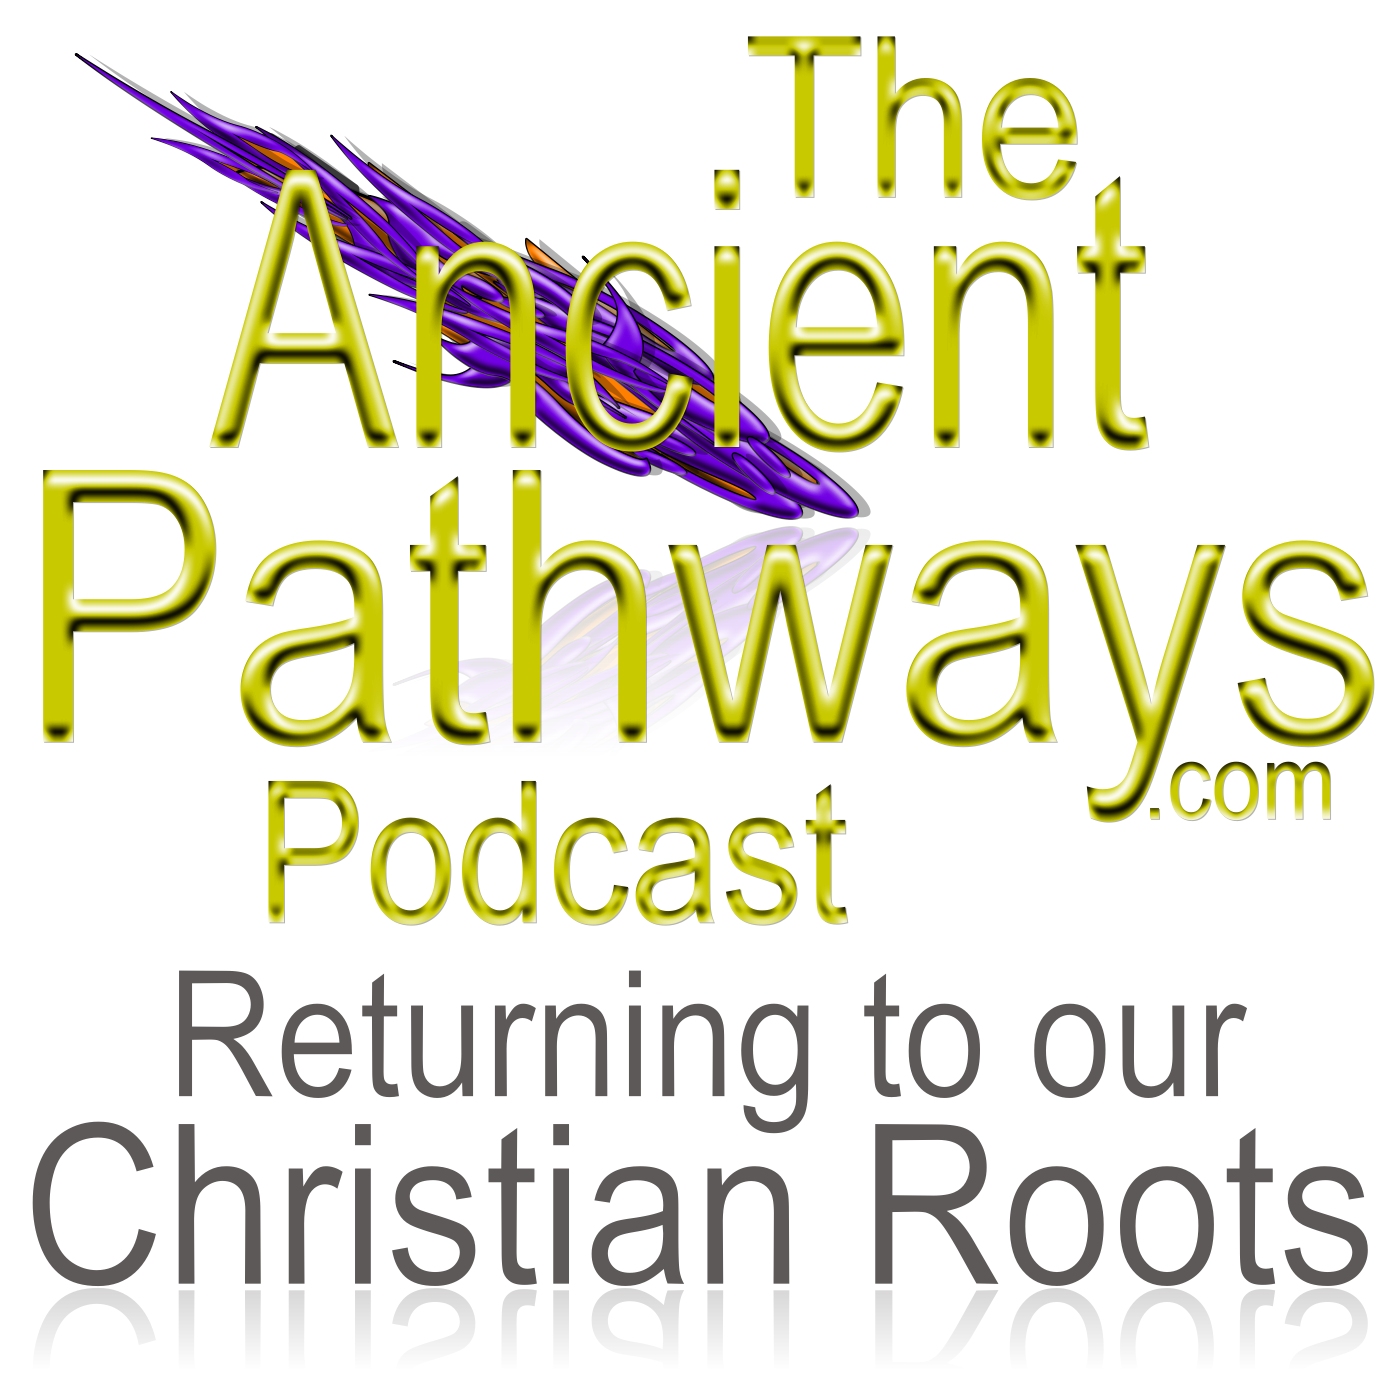 The Ancient Pathways.com